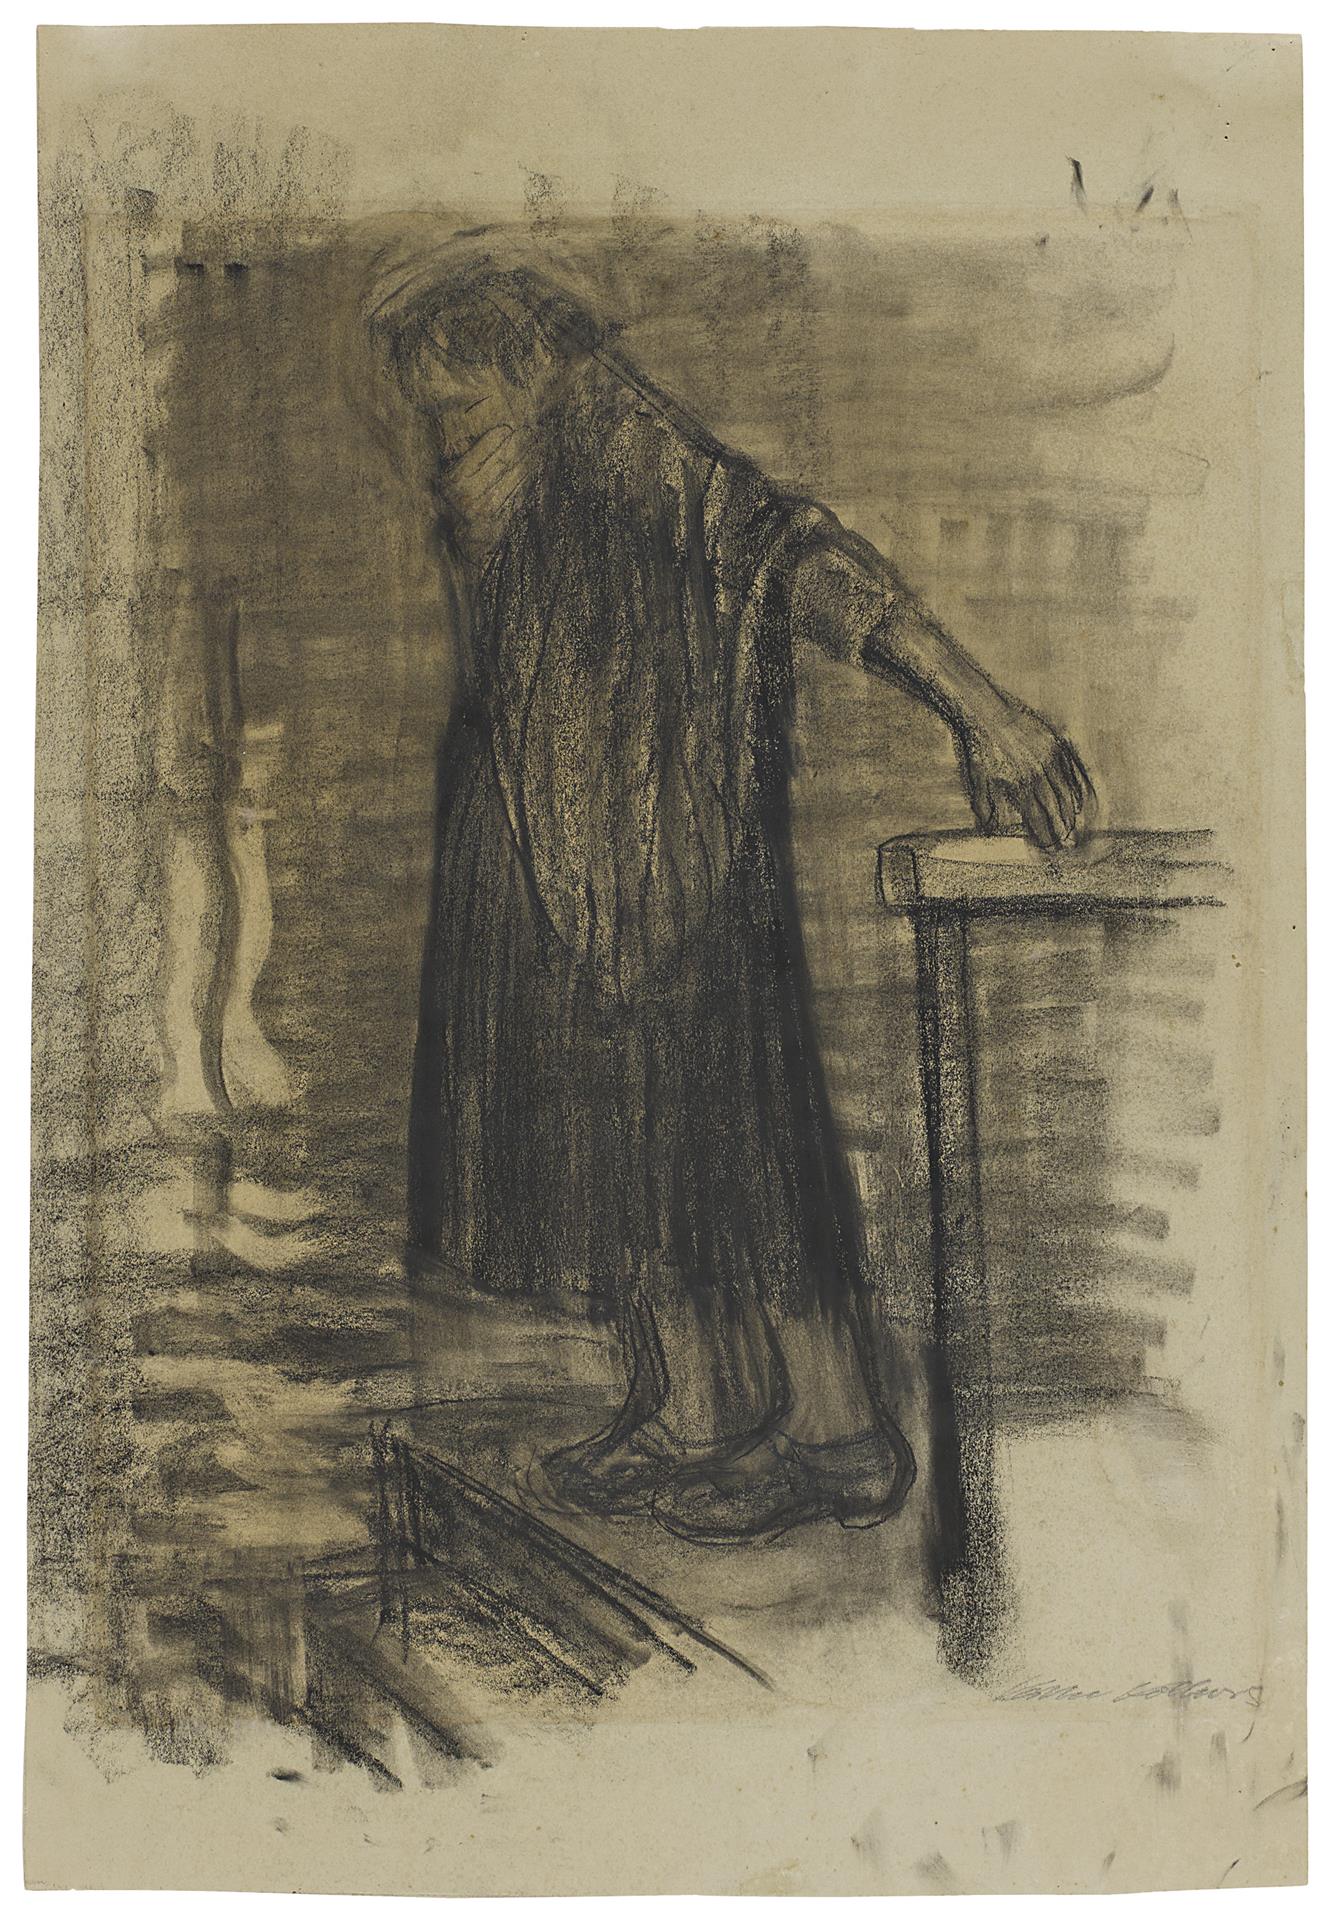 Käthe Kollwitz, Pregnant Woman, drowning herself, c 1926, charcoal, NT (1114a), Cologne Kollwitz Collection © Käthe Kollwitz Museum Köln